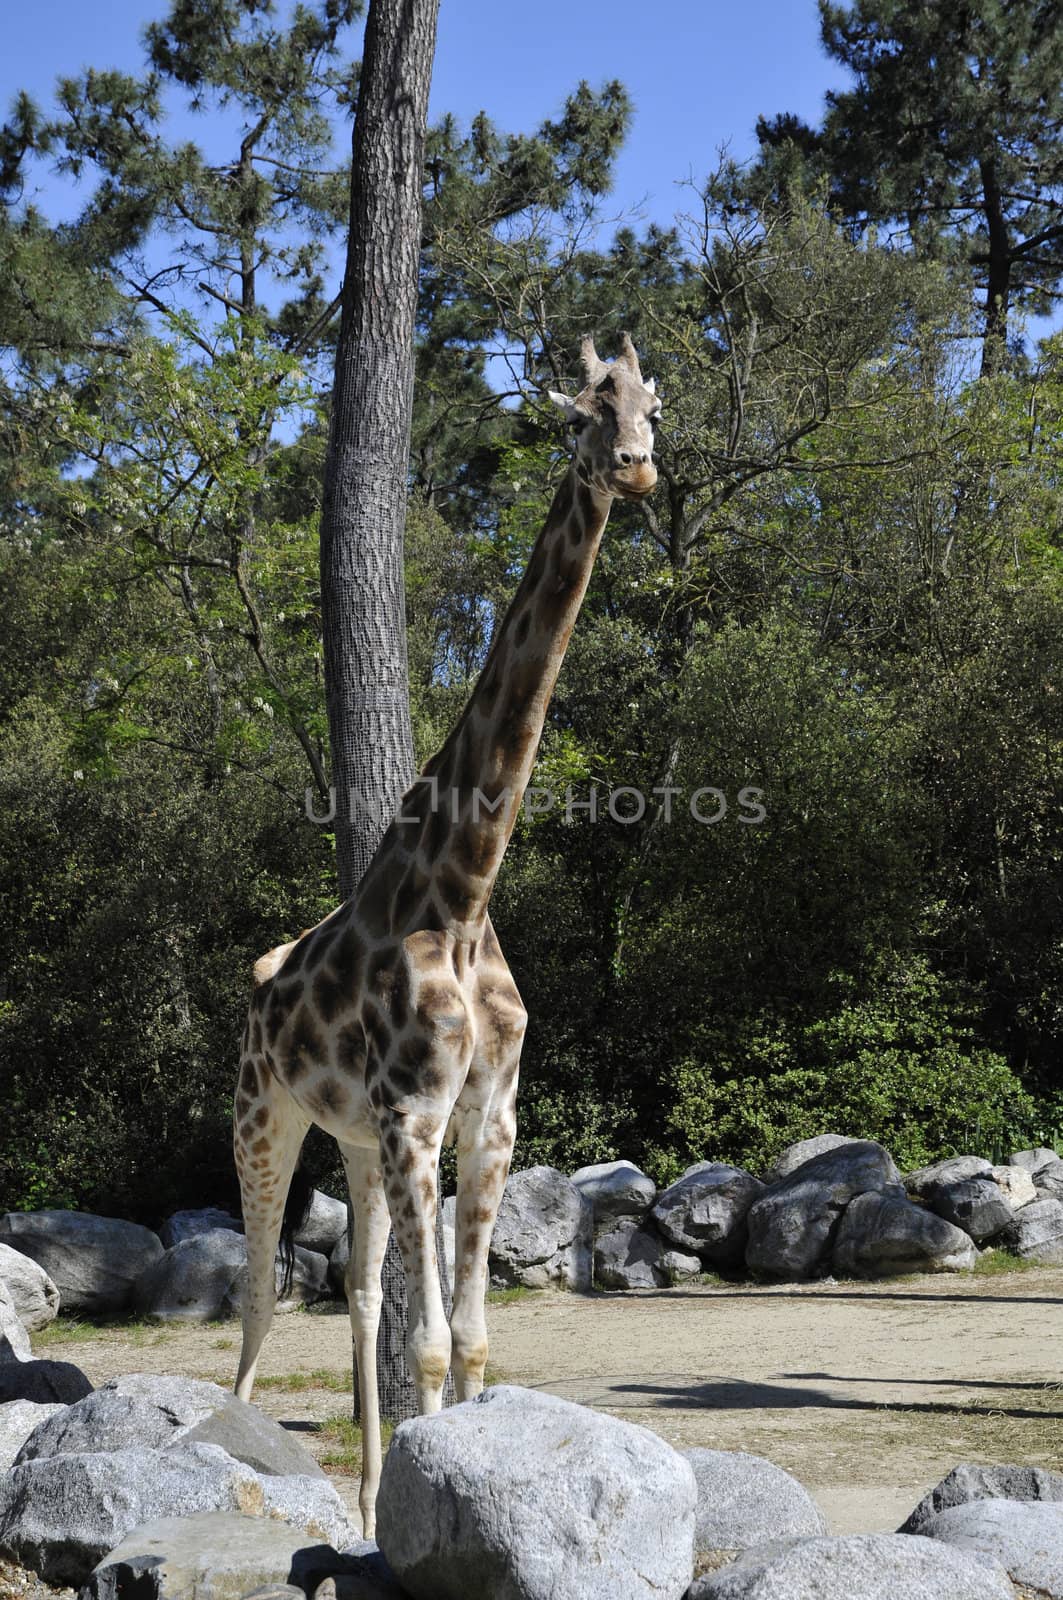 Giraffe in a Zoo Enclosure by shkyo30